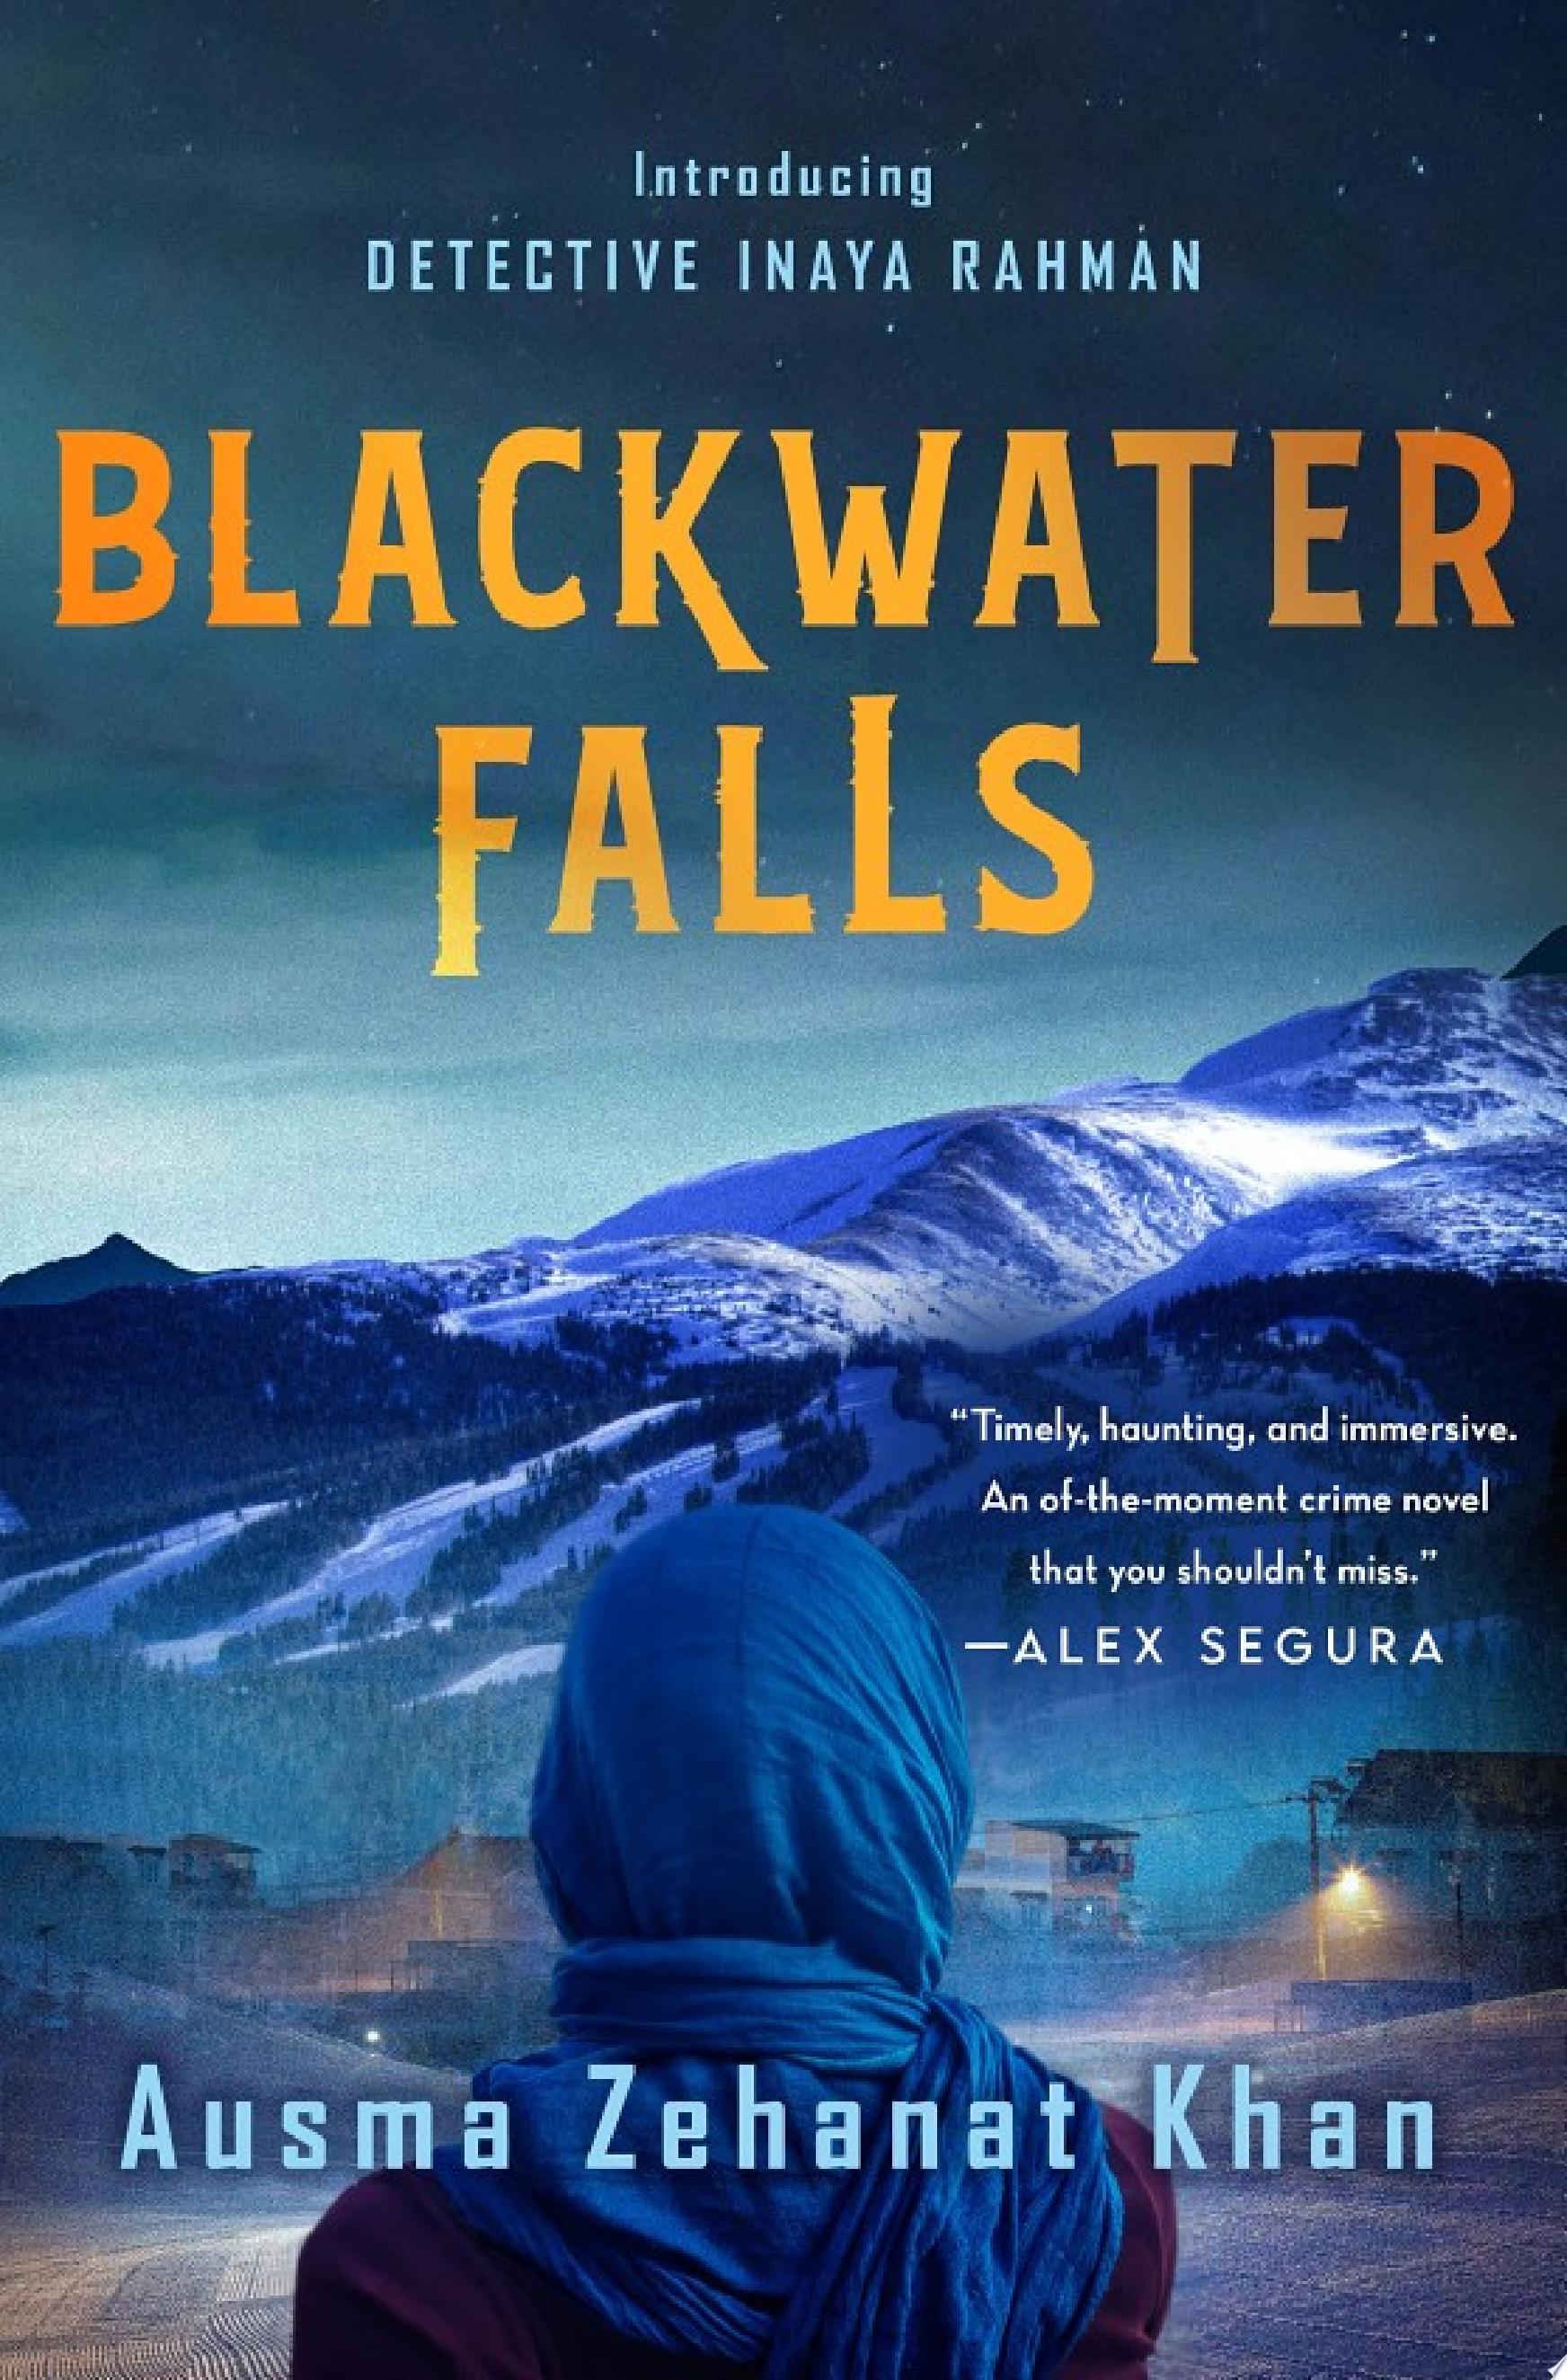 Image for "Blackwater Falls"